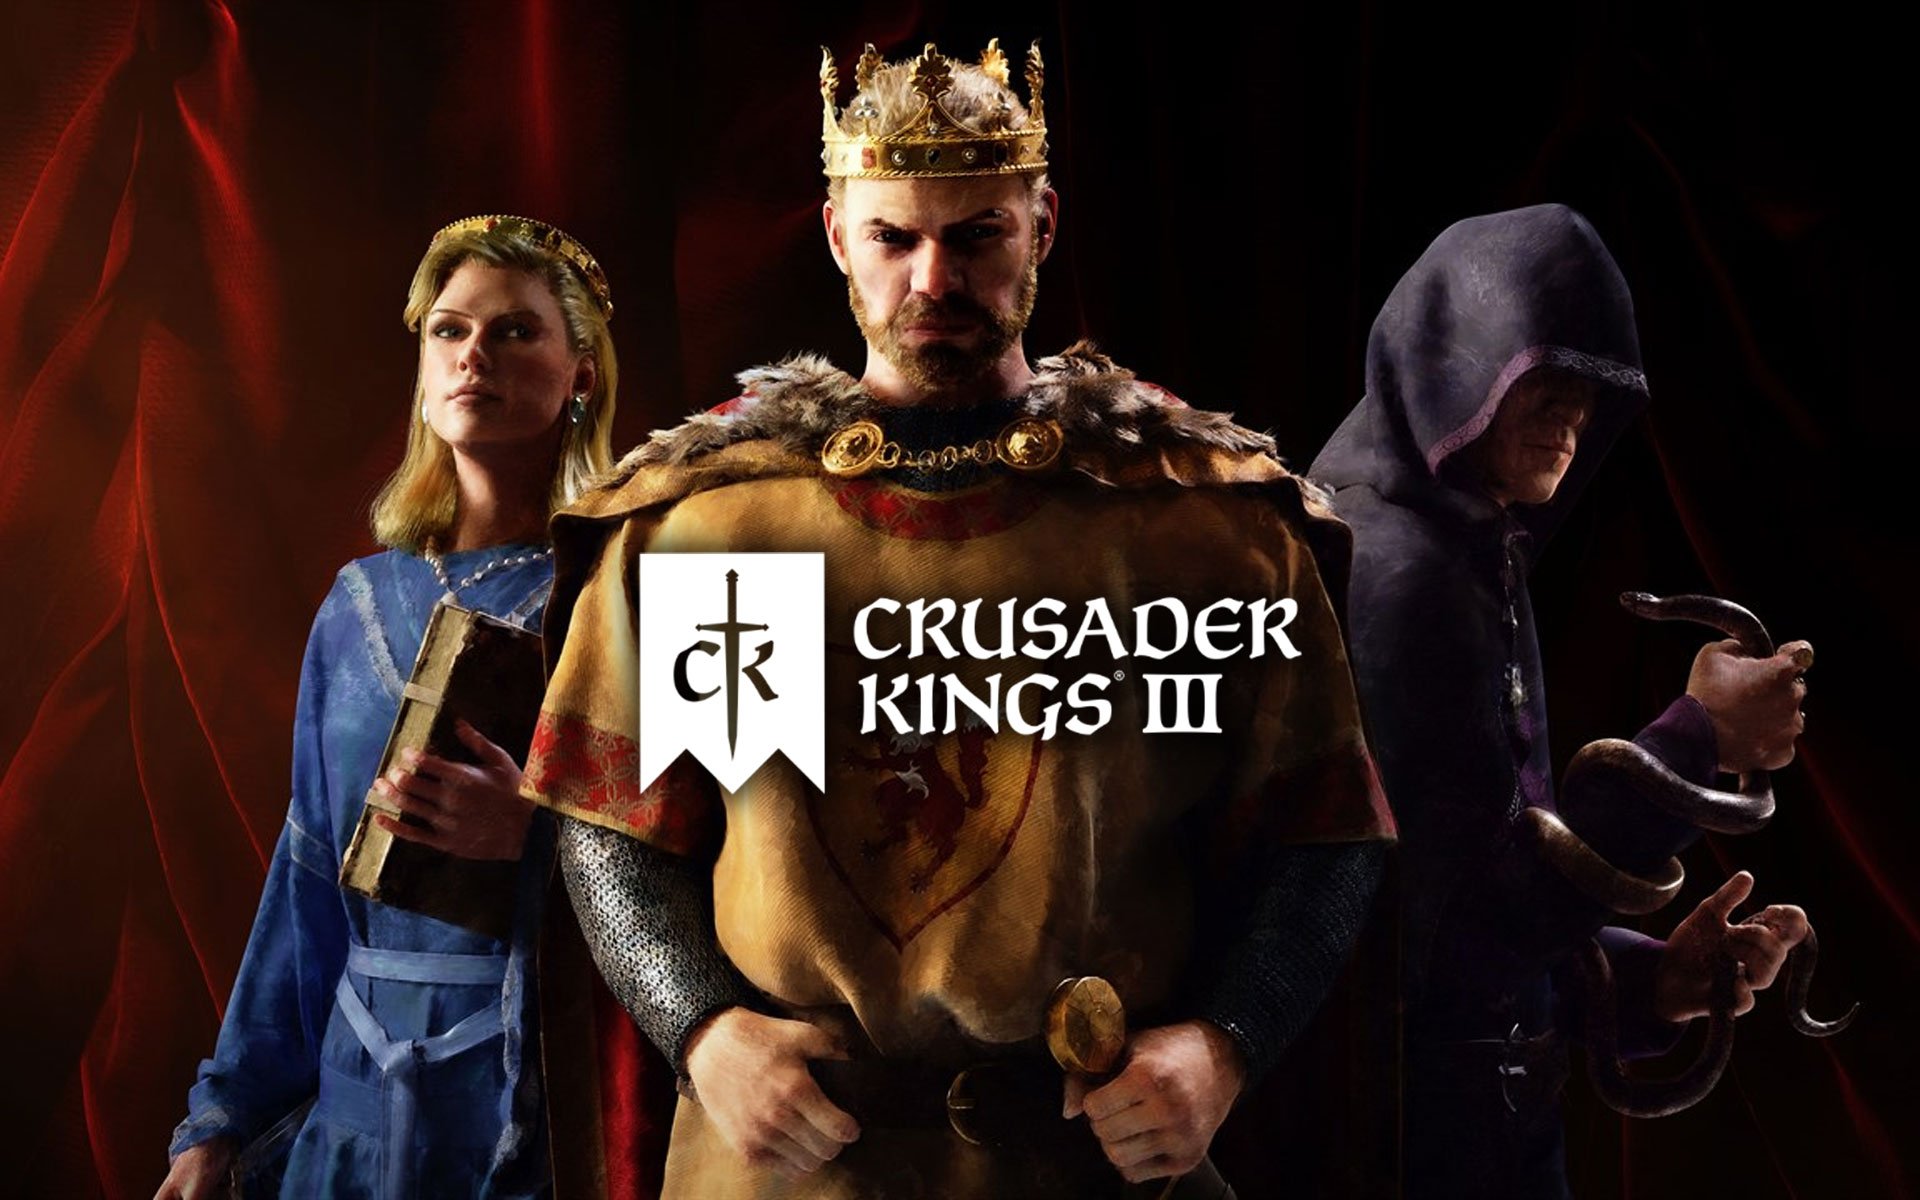 Compre Crusader Kings a partir de R$ 93.99